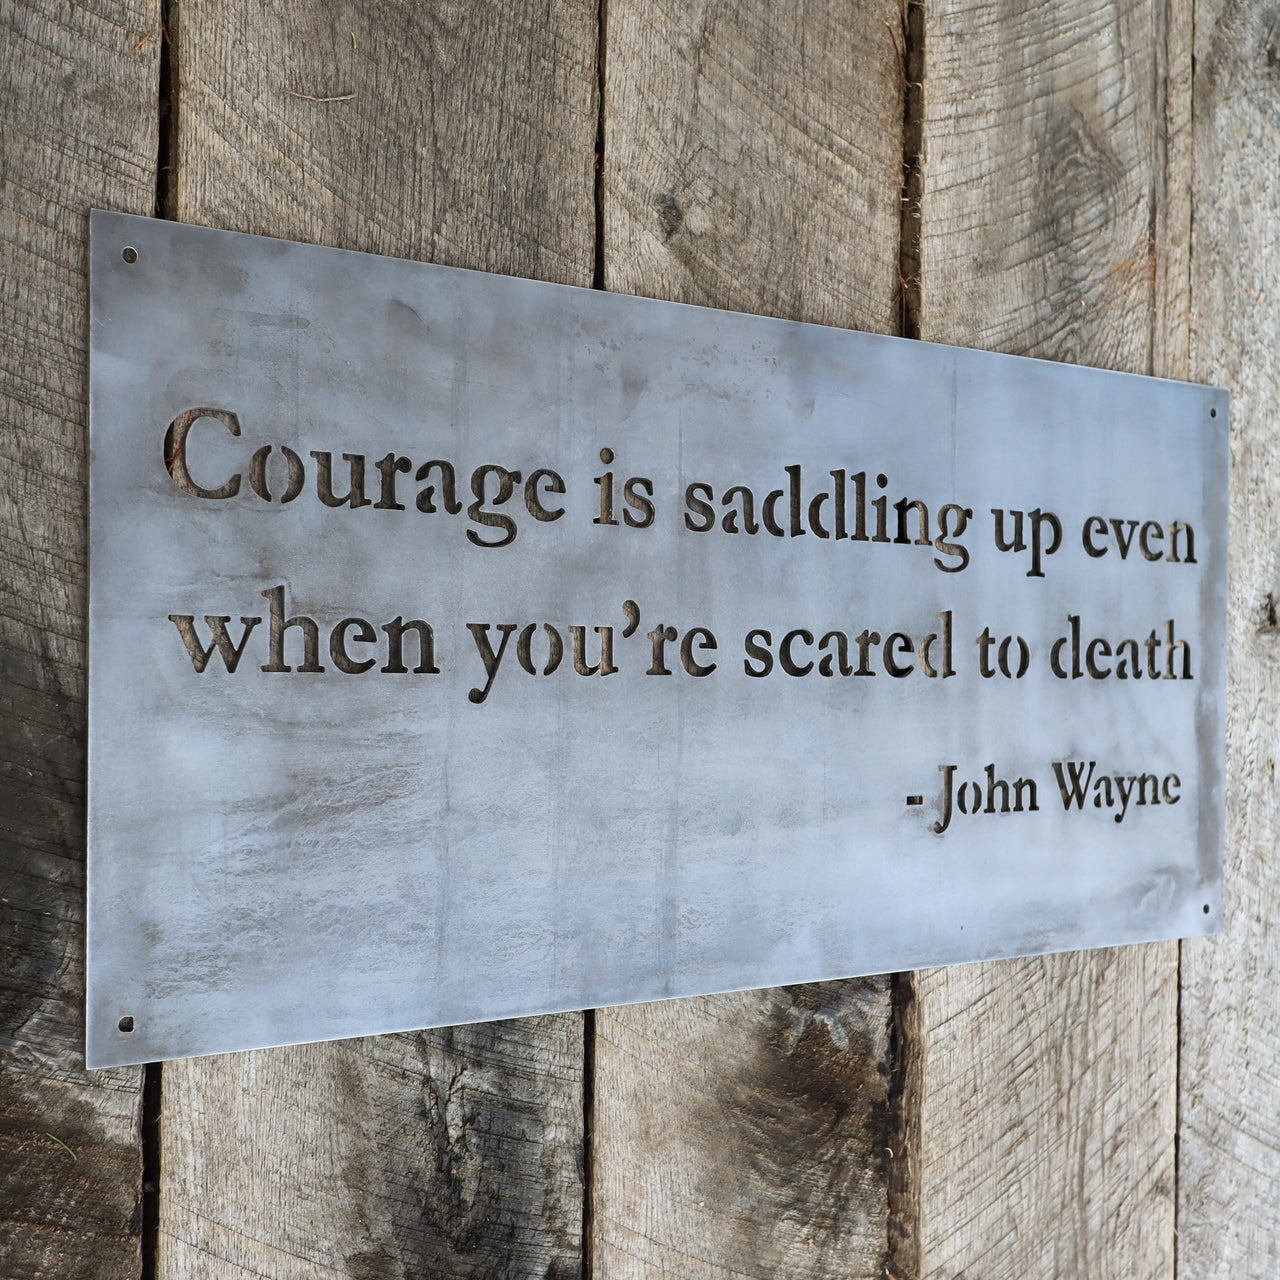 John Wayne Courage Sign - Cowboy Western Wall Art - Man Cave Workshop Garage Decor